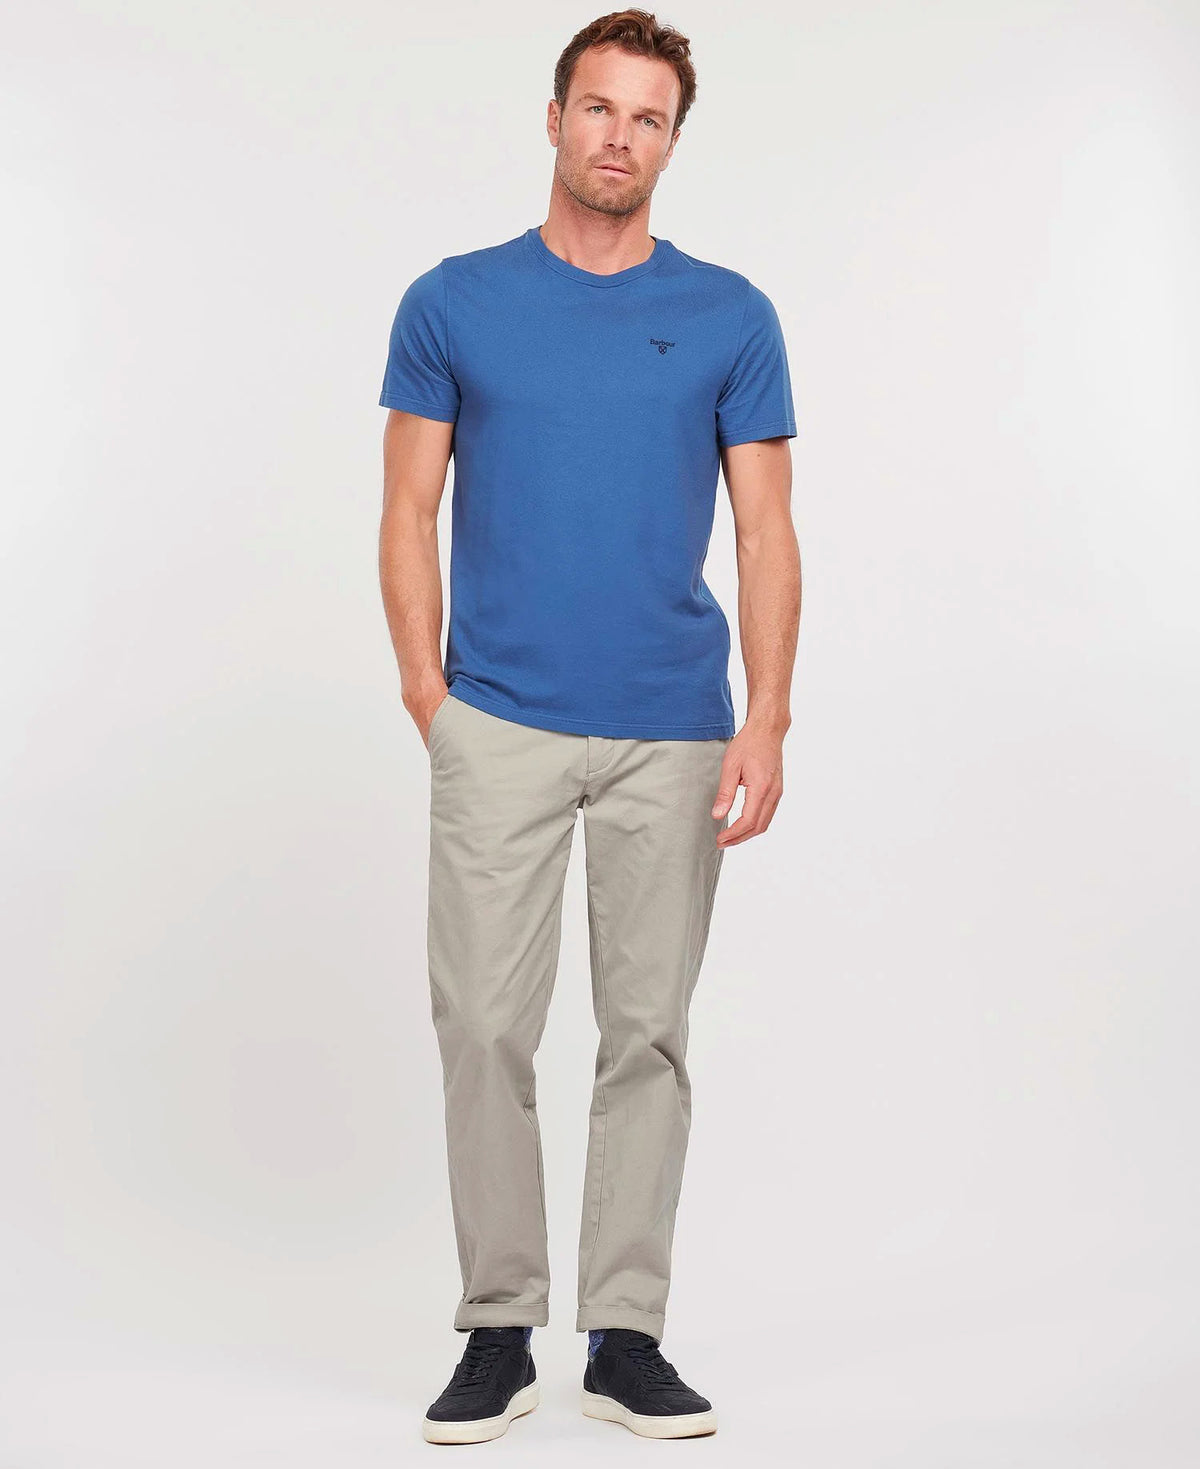 Barbour Men's Sports T-Shirt - Short Sleeved, 02, Mts0331, Loch Blue